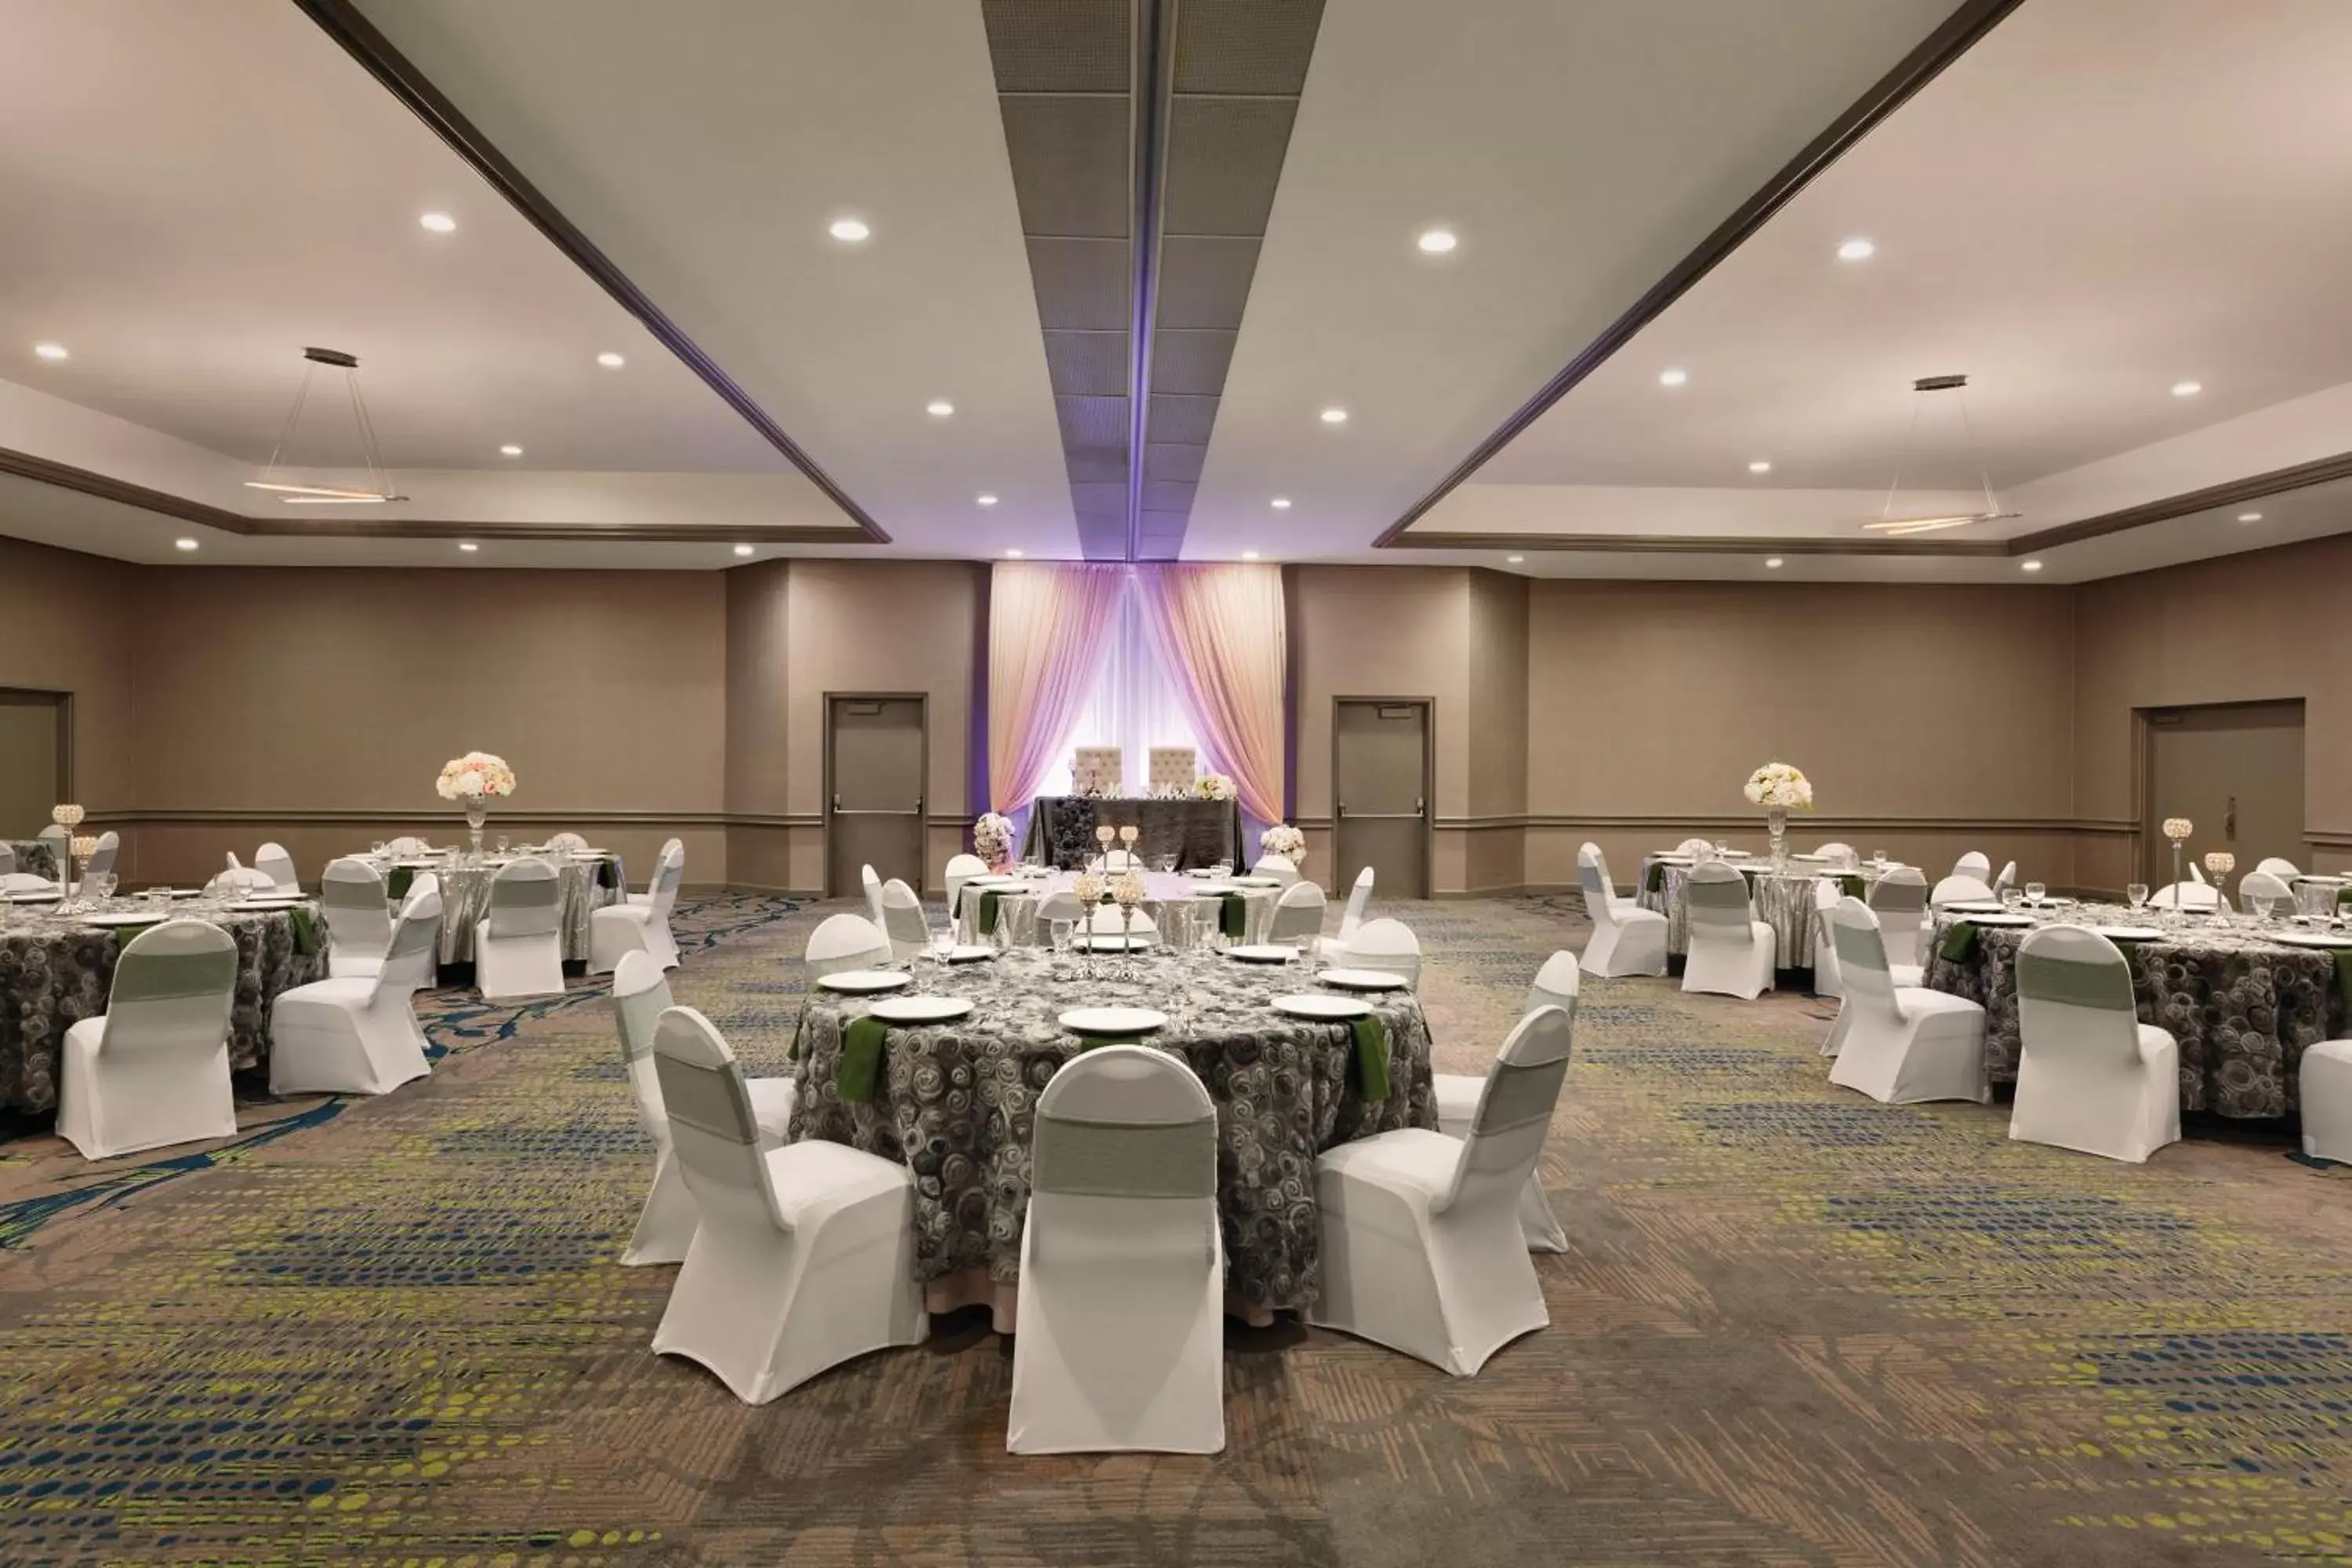 Banquet/Function facilities, Banquet Facilities in Radisson Hotel Lenexa Overland Park